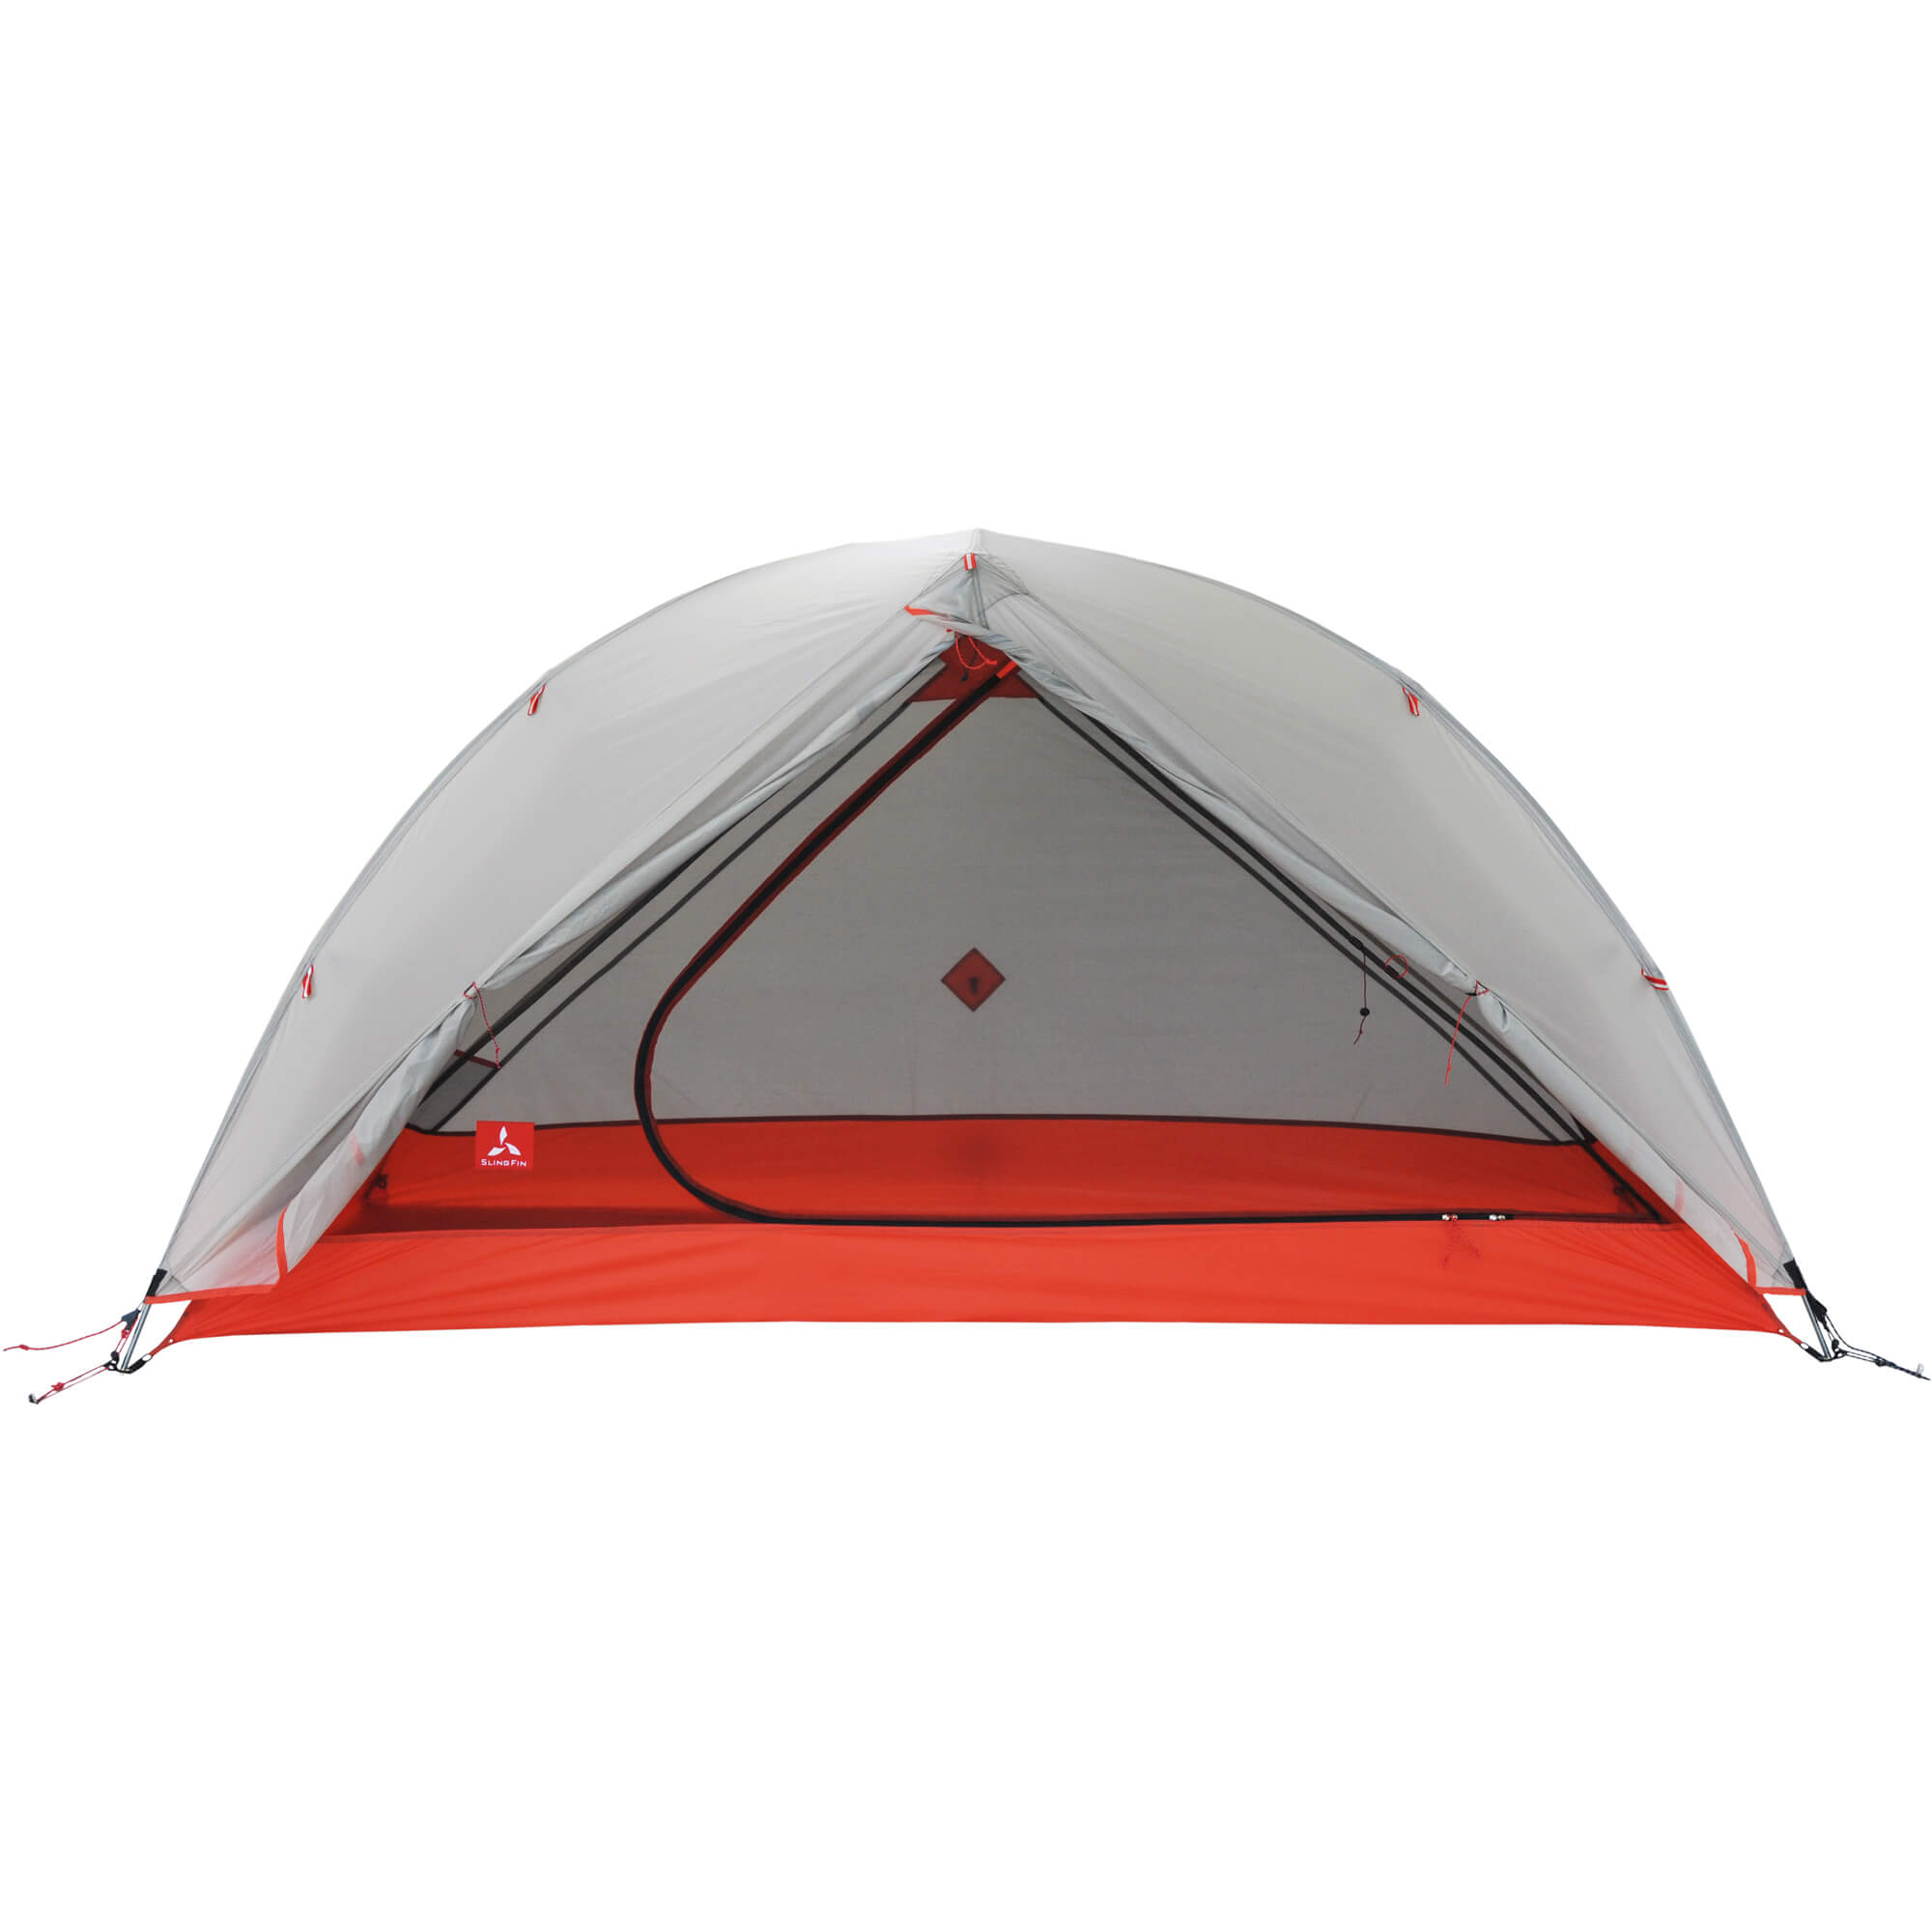 Slingfin Portal 1P Ultralight Backpacking Tent